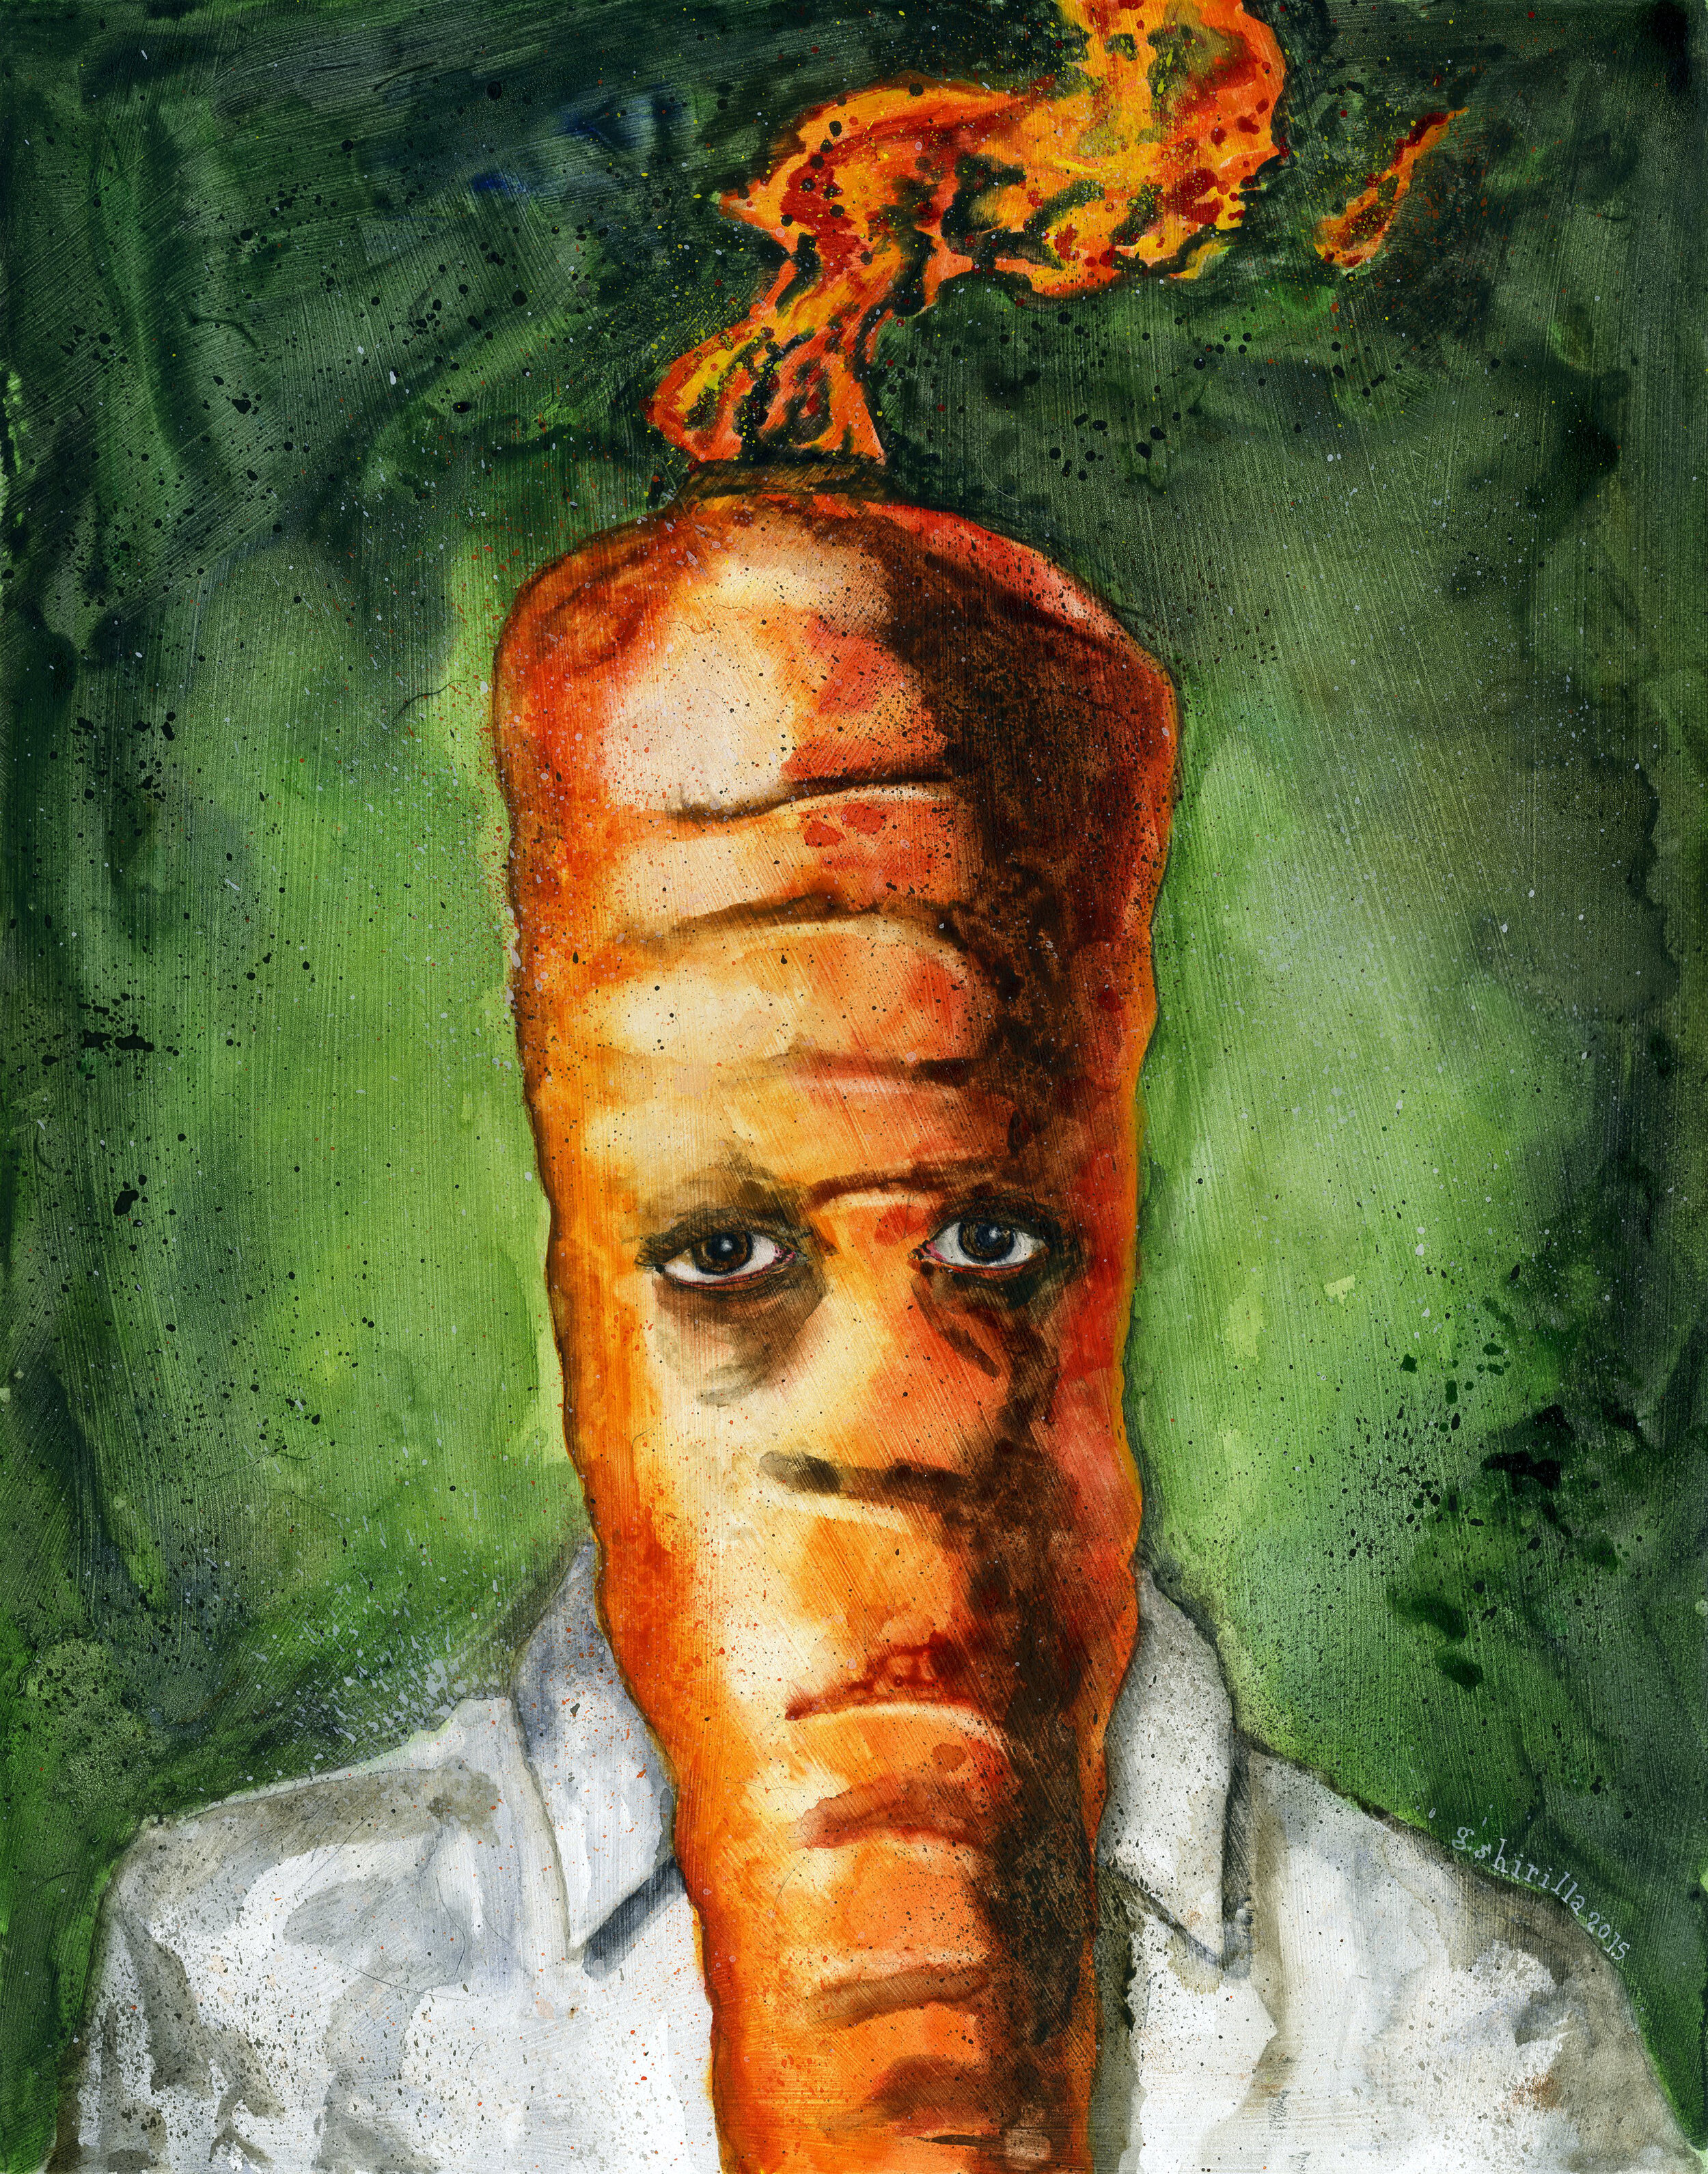 "Flaming Carrot" 2015